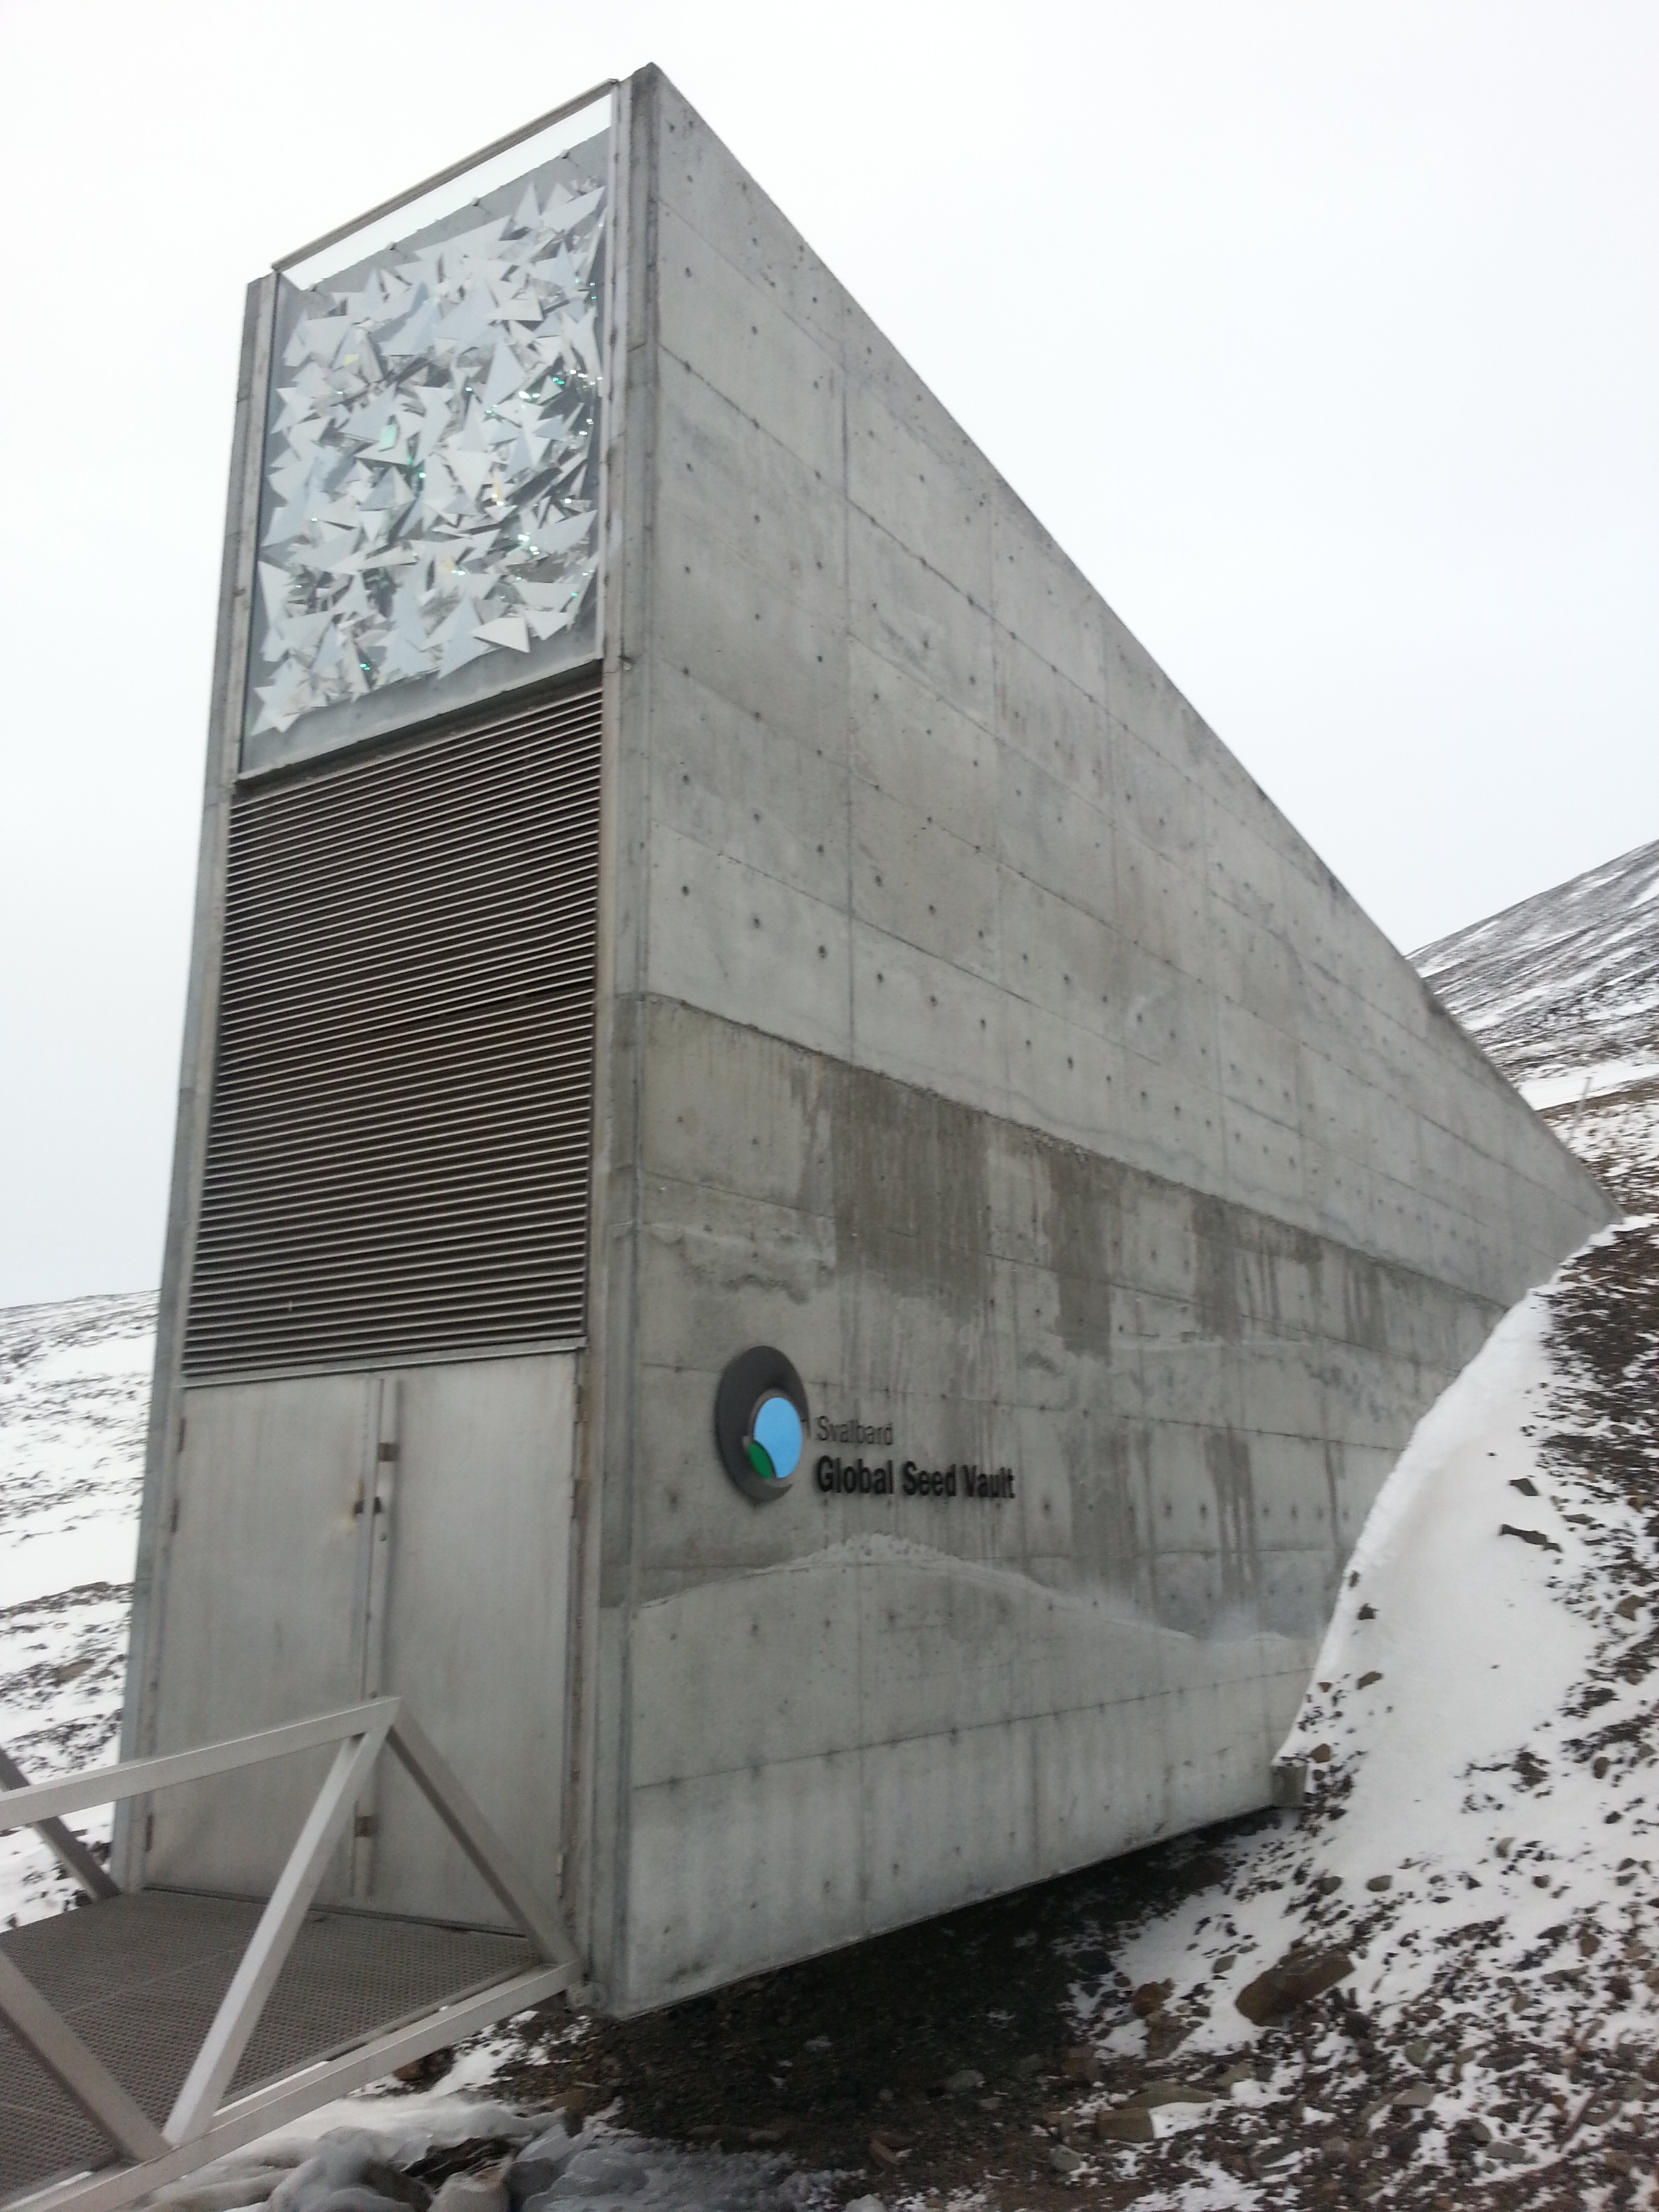 Svalbard Global Seed Vault. Credit: Anna Rehnberg